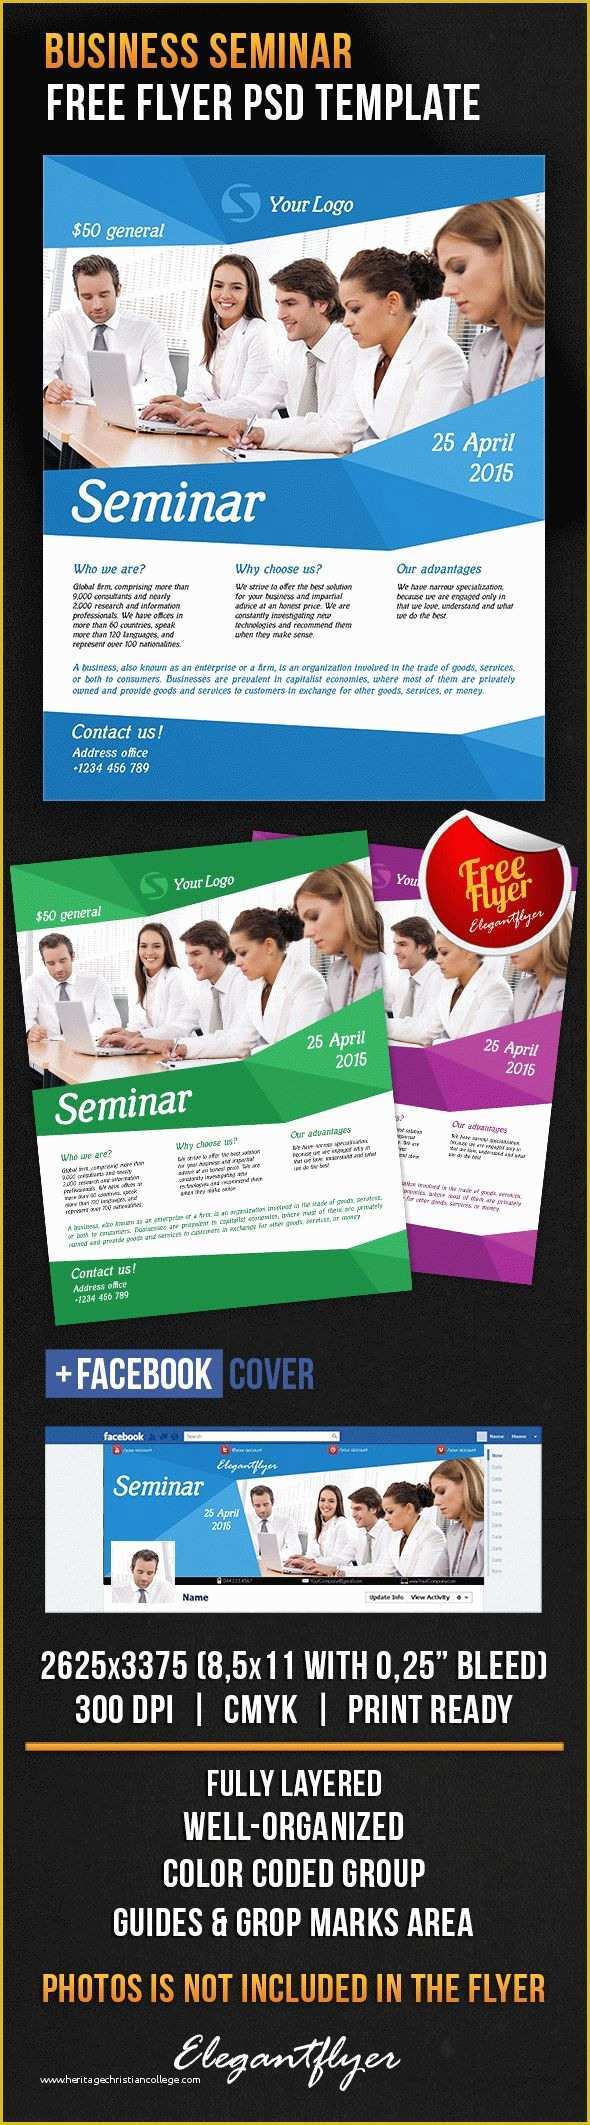 Free Psd Business Flyer Templates Of Business Seminar – Free Flyer Psd Template – by Elegantflyer